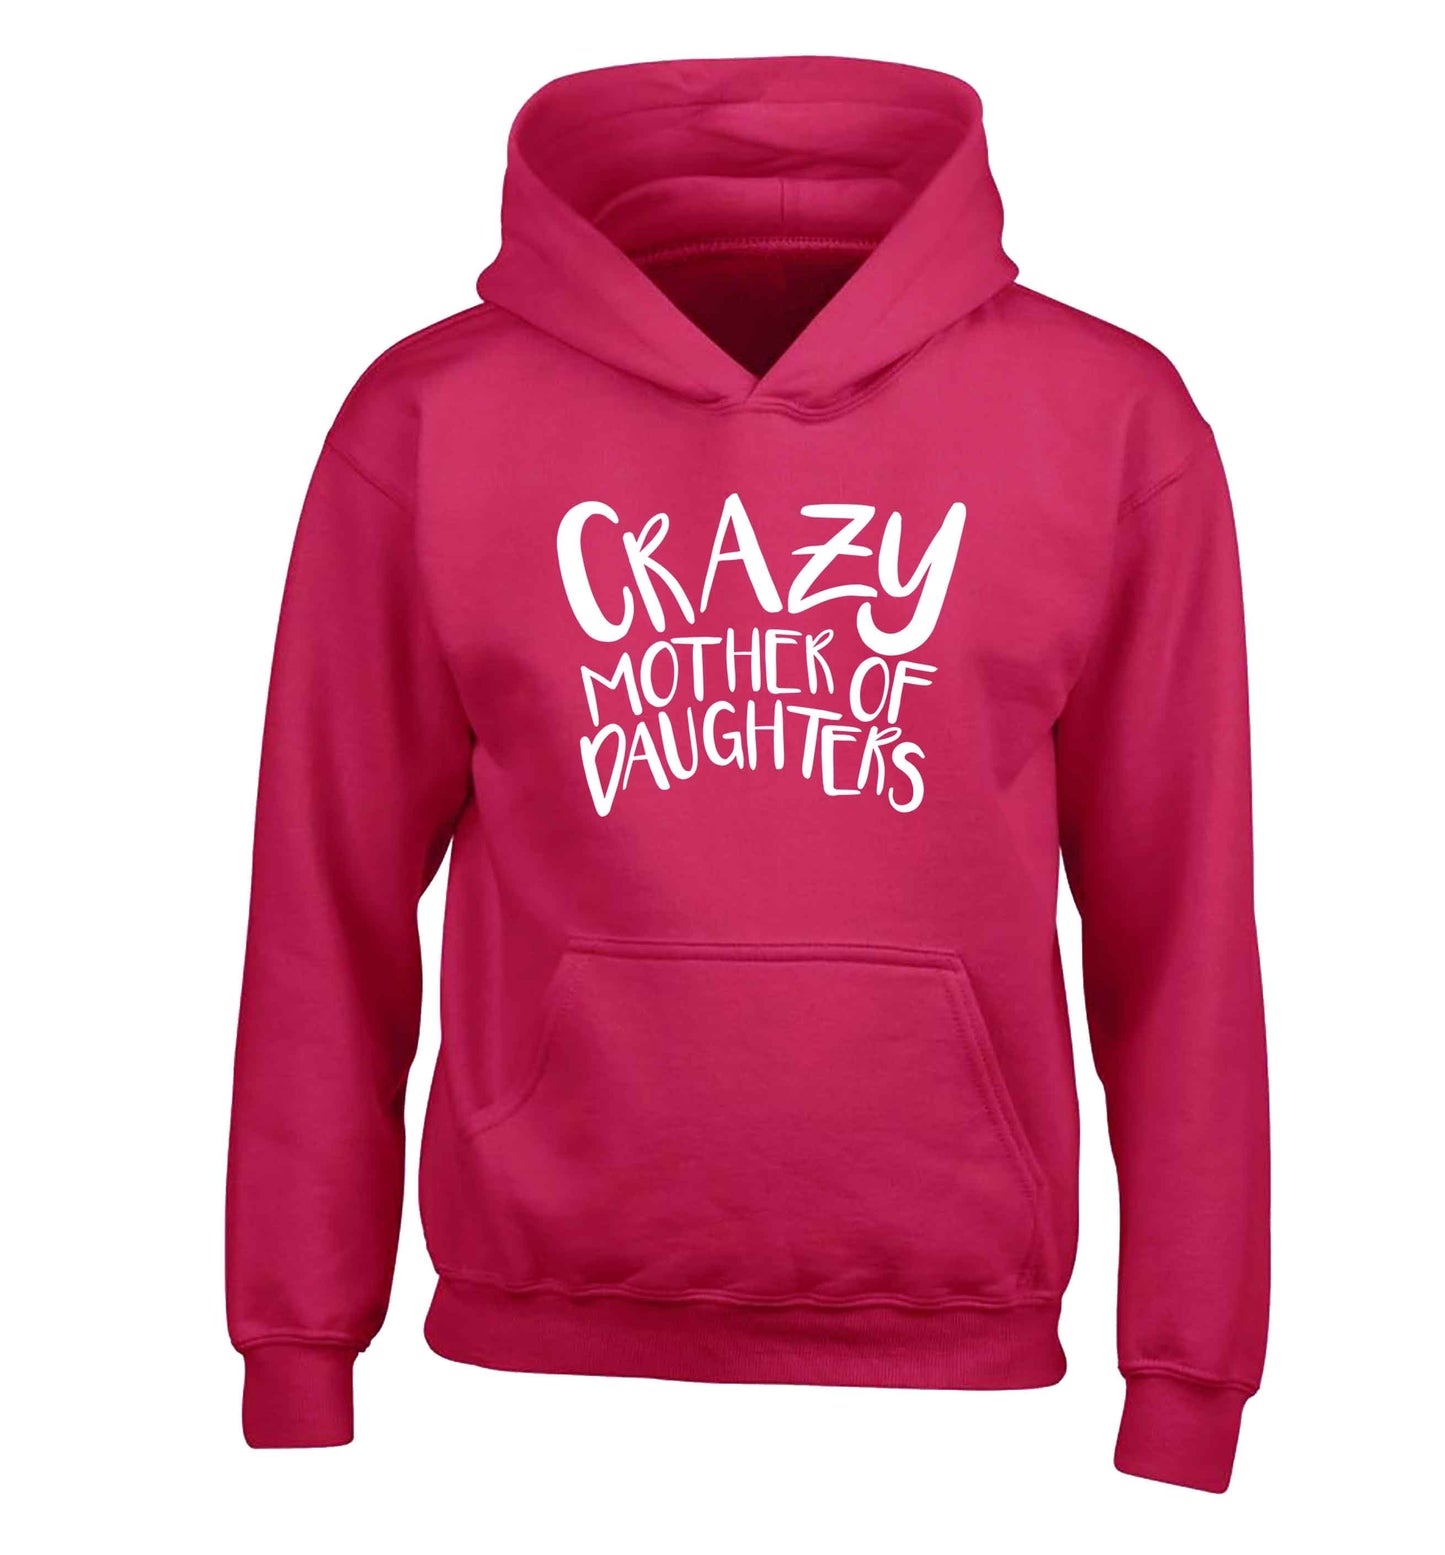 Crazy mother of daughters children's pink hoodie 12-13 Years